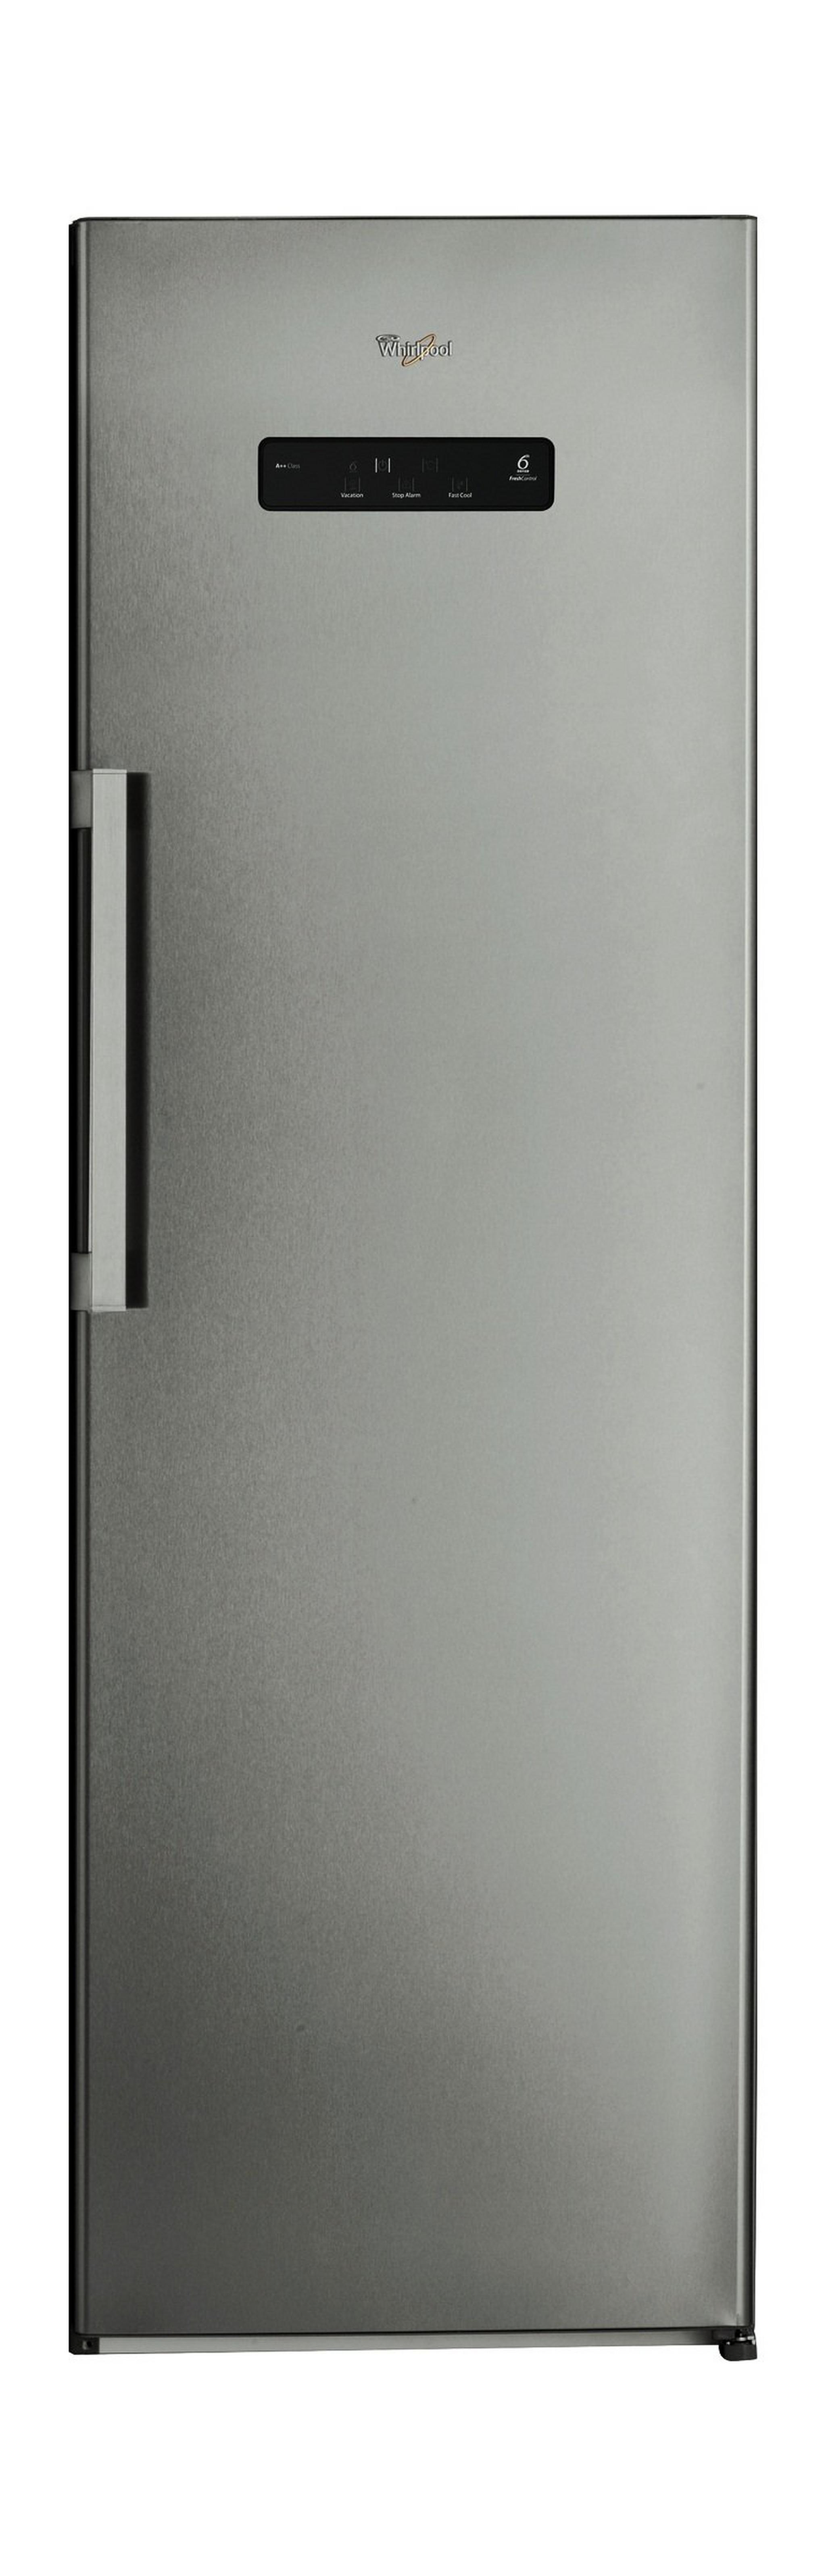 Whirlpool 13 Cft. Single Door Refrigerator (WME36962) - Silver